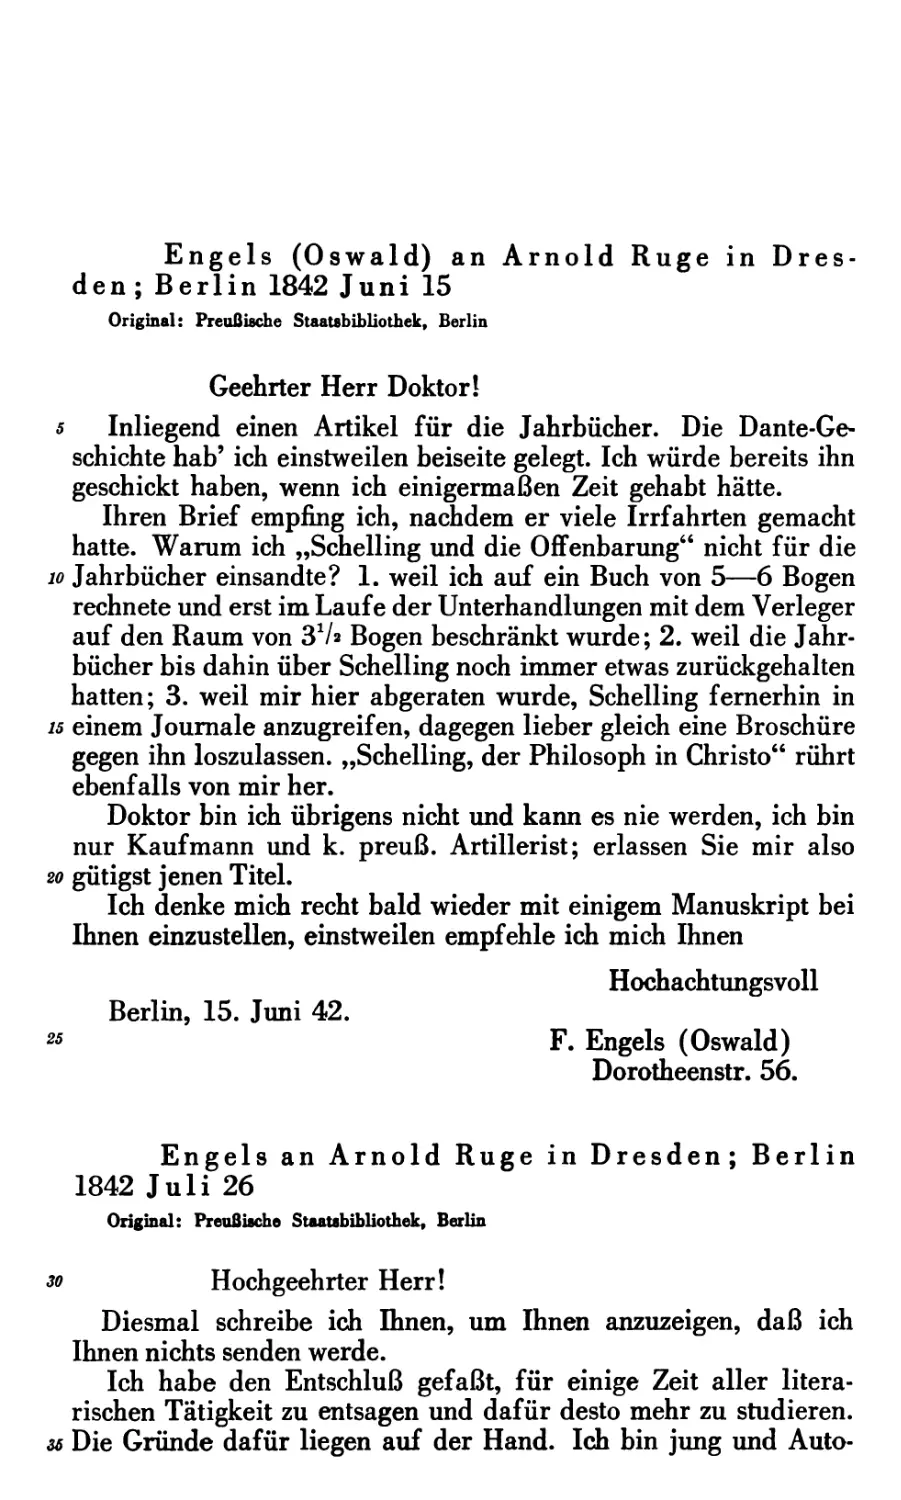 Engels an Arnold Ruge in Dresden; Berlin 1842 Juli 26